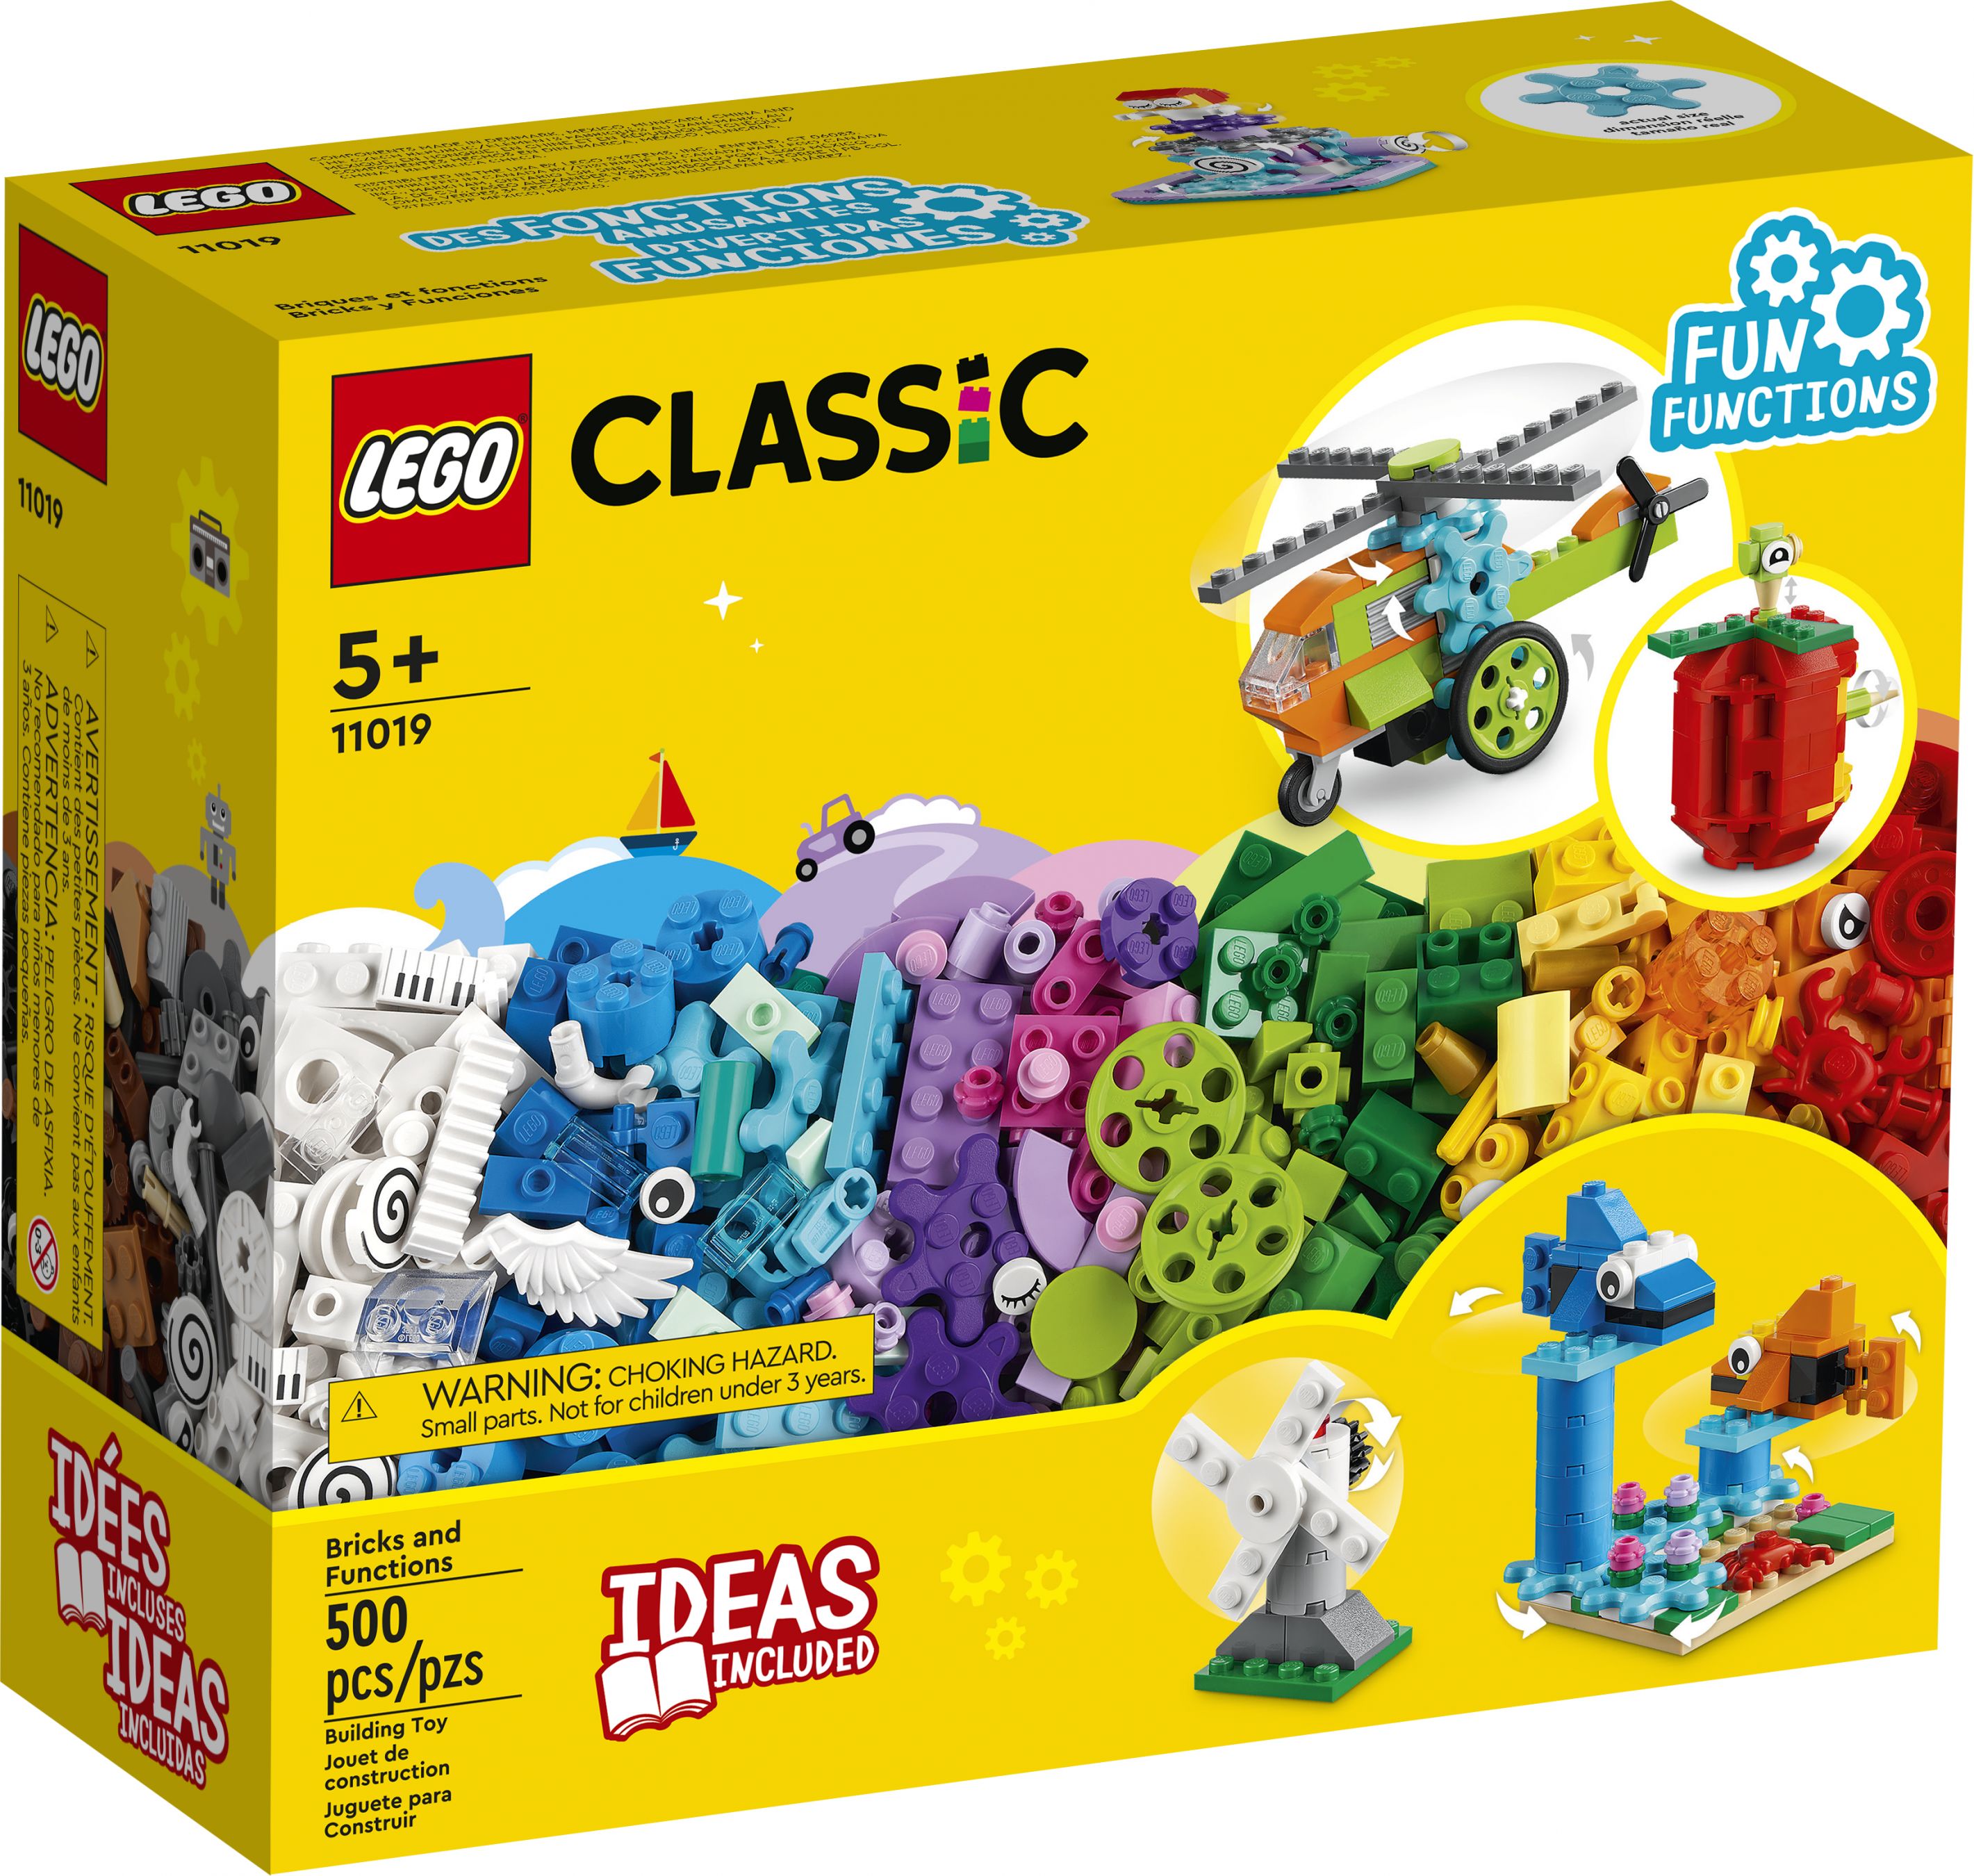 LEGO Classic 11019 Bausteine und Funktionen LEGO_11019_Box1_v39.jpg